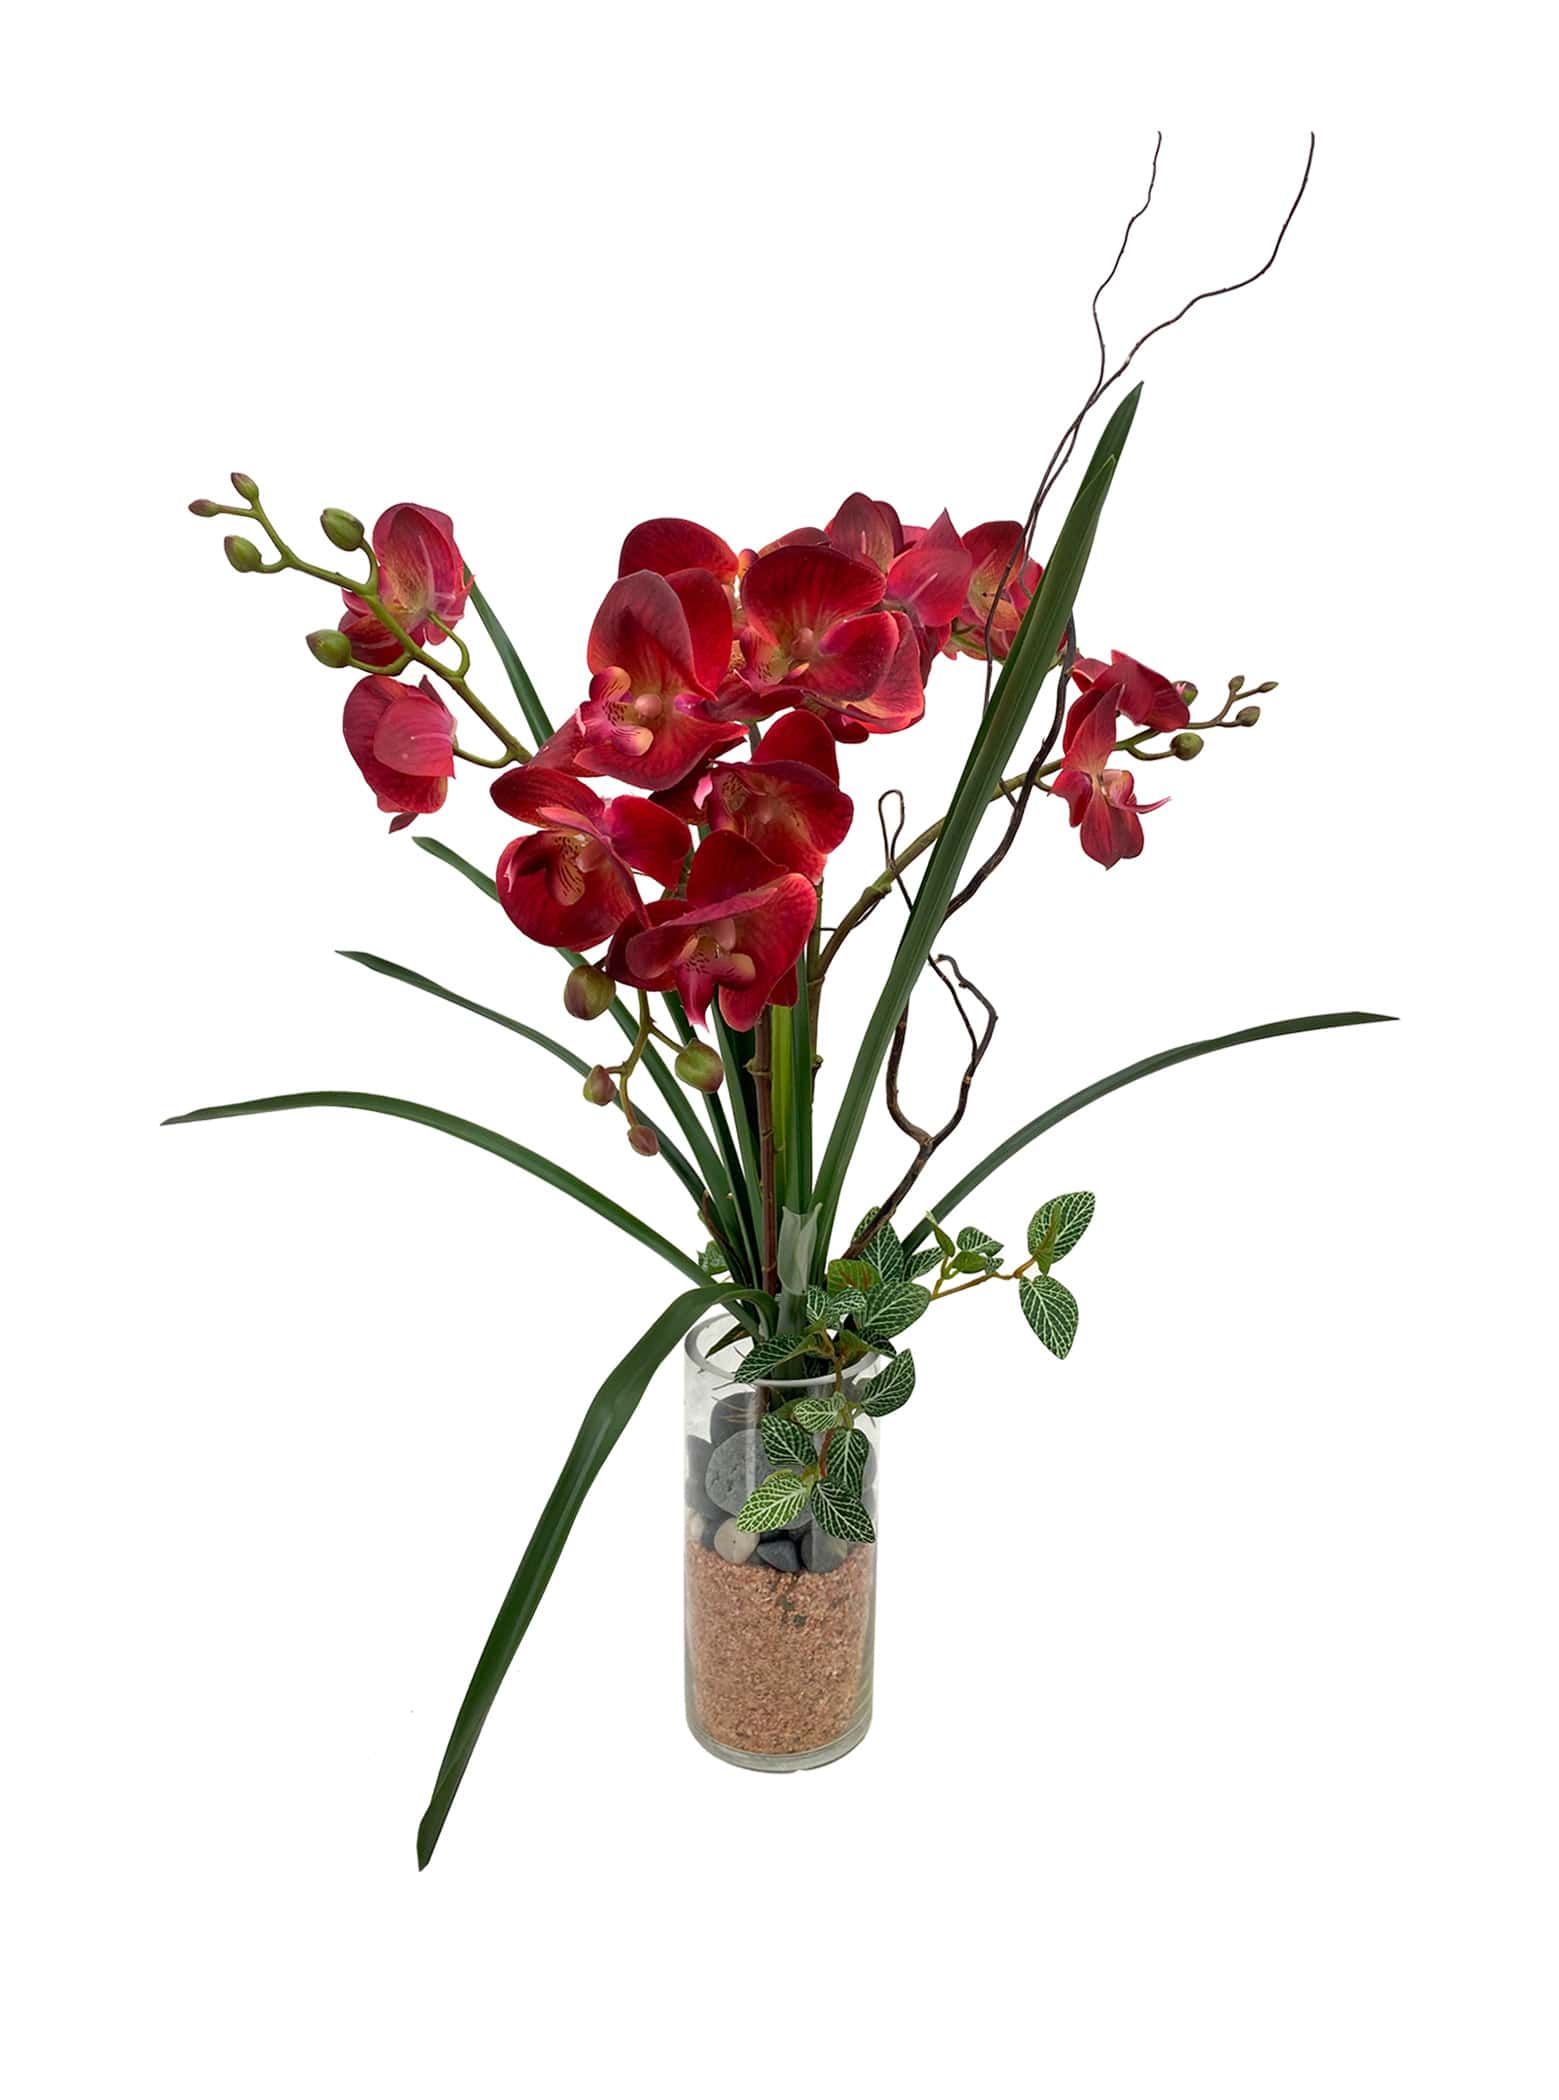 Elegant Red Phalaenopsis